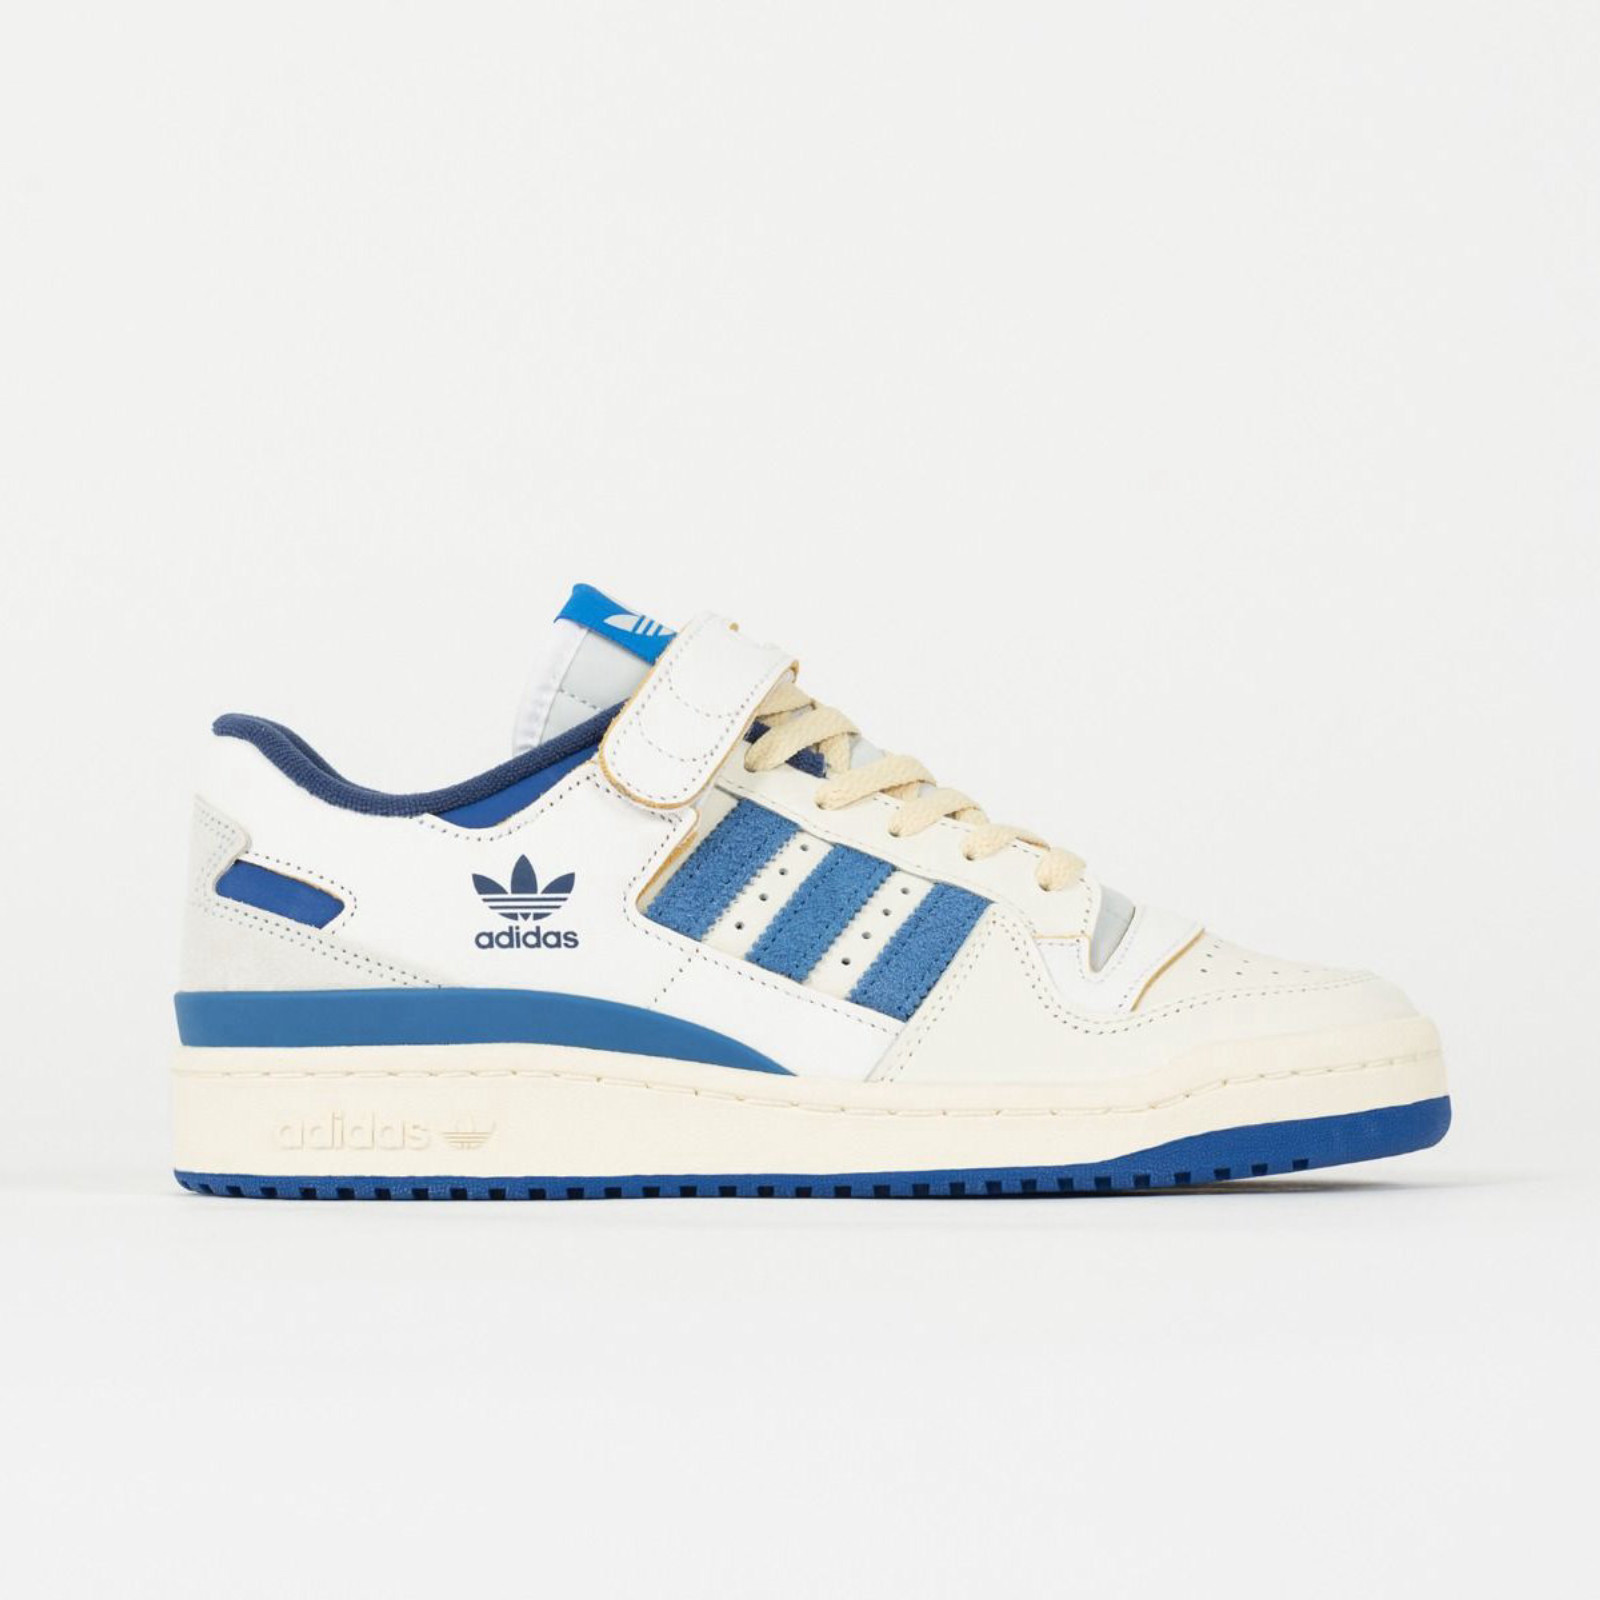 Adidas Forum 84 Low
White / Blue